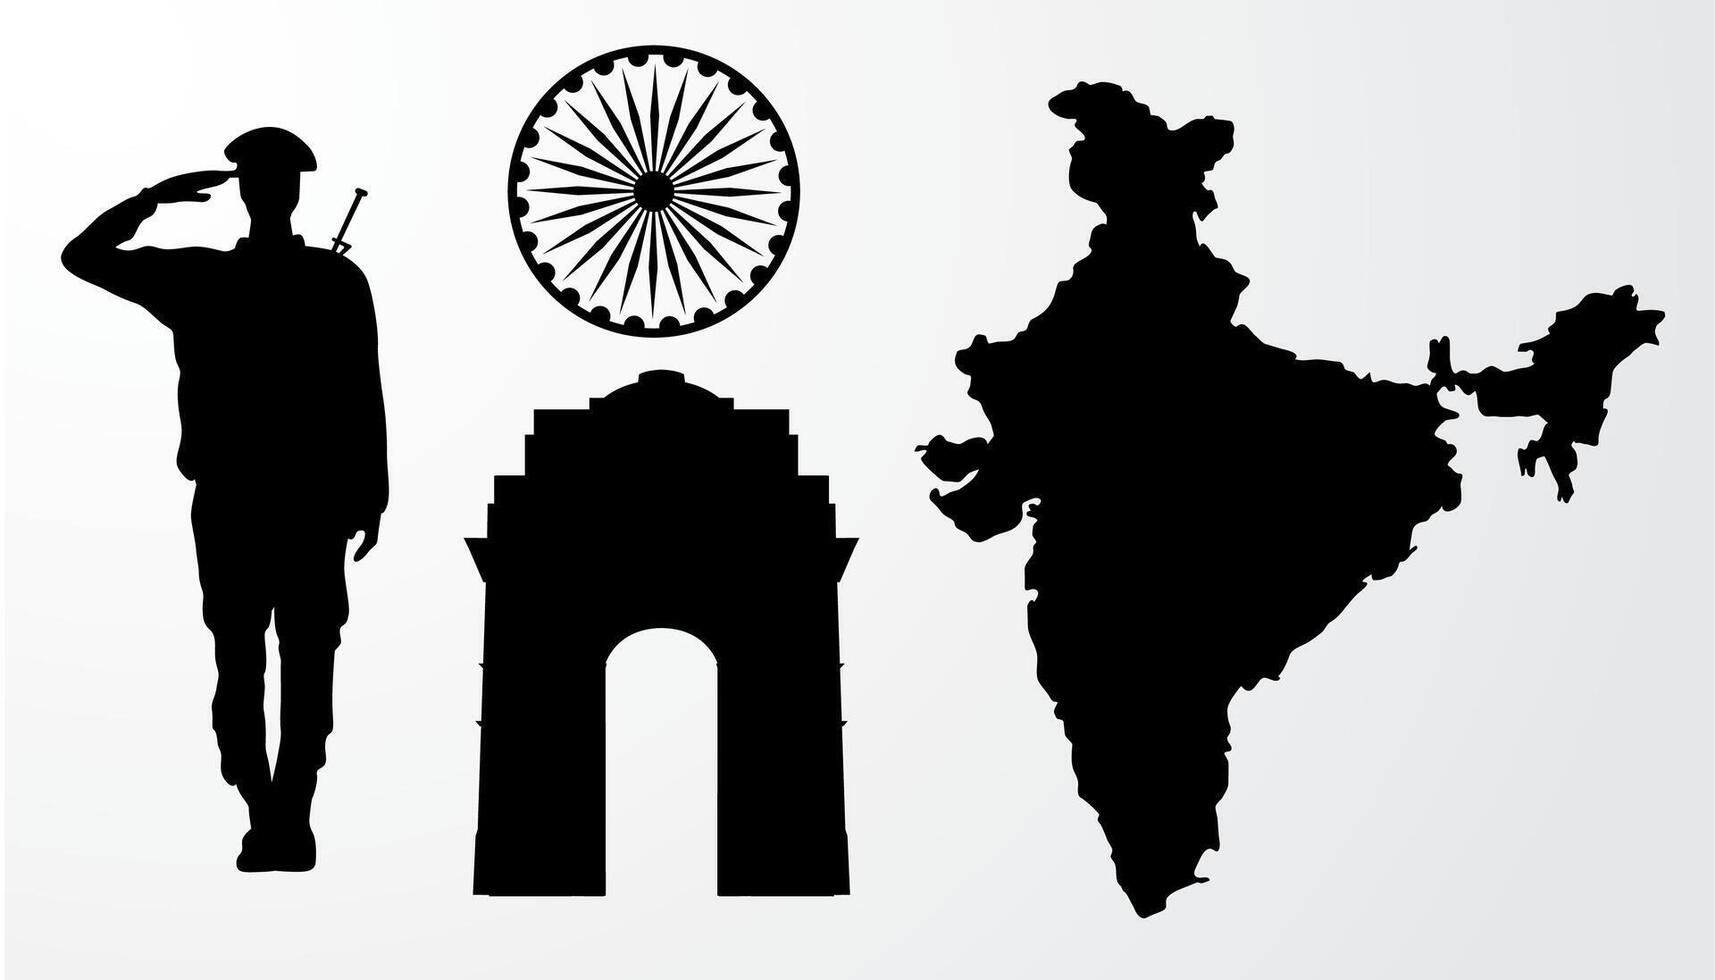 India mapa, India puerta, ashoka chakra y soldado silueta vector